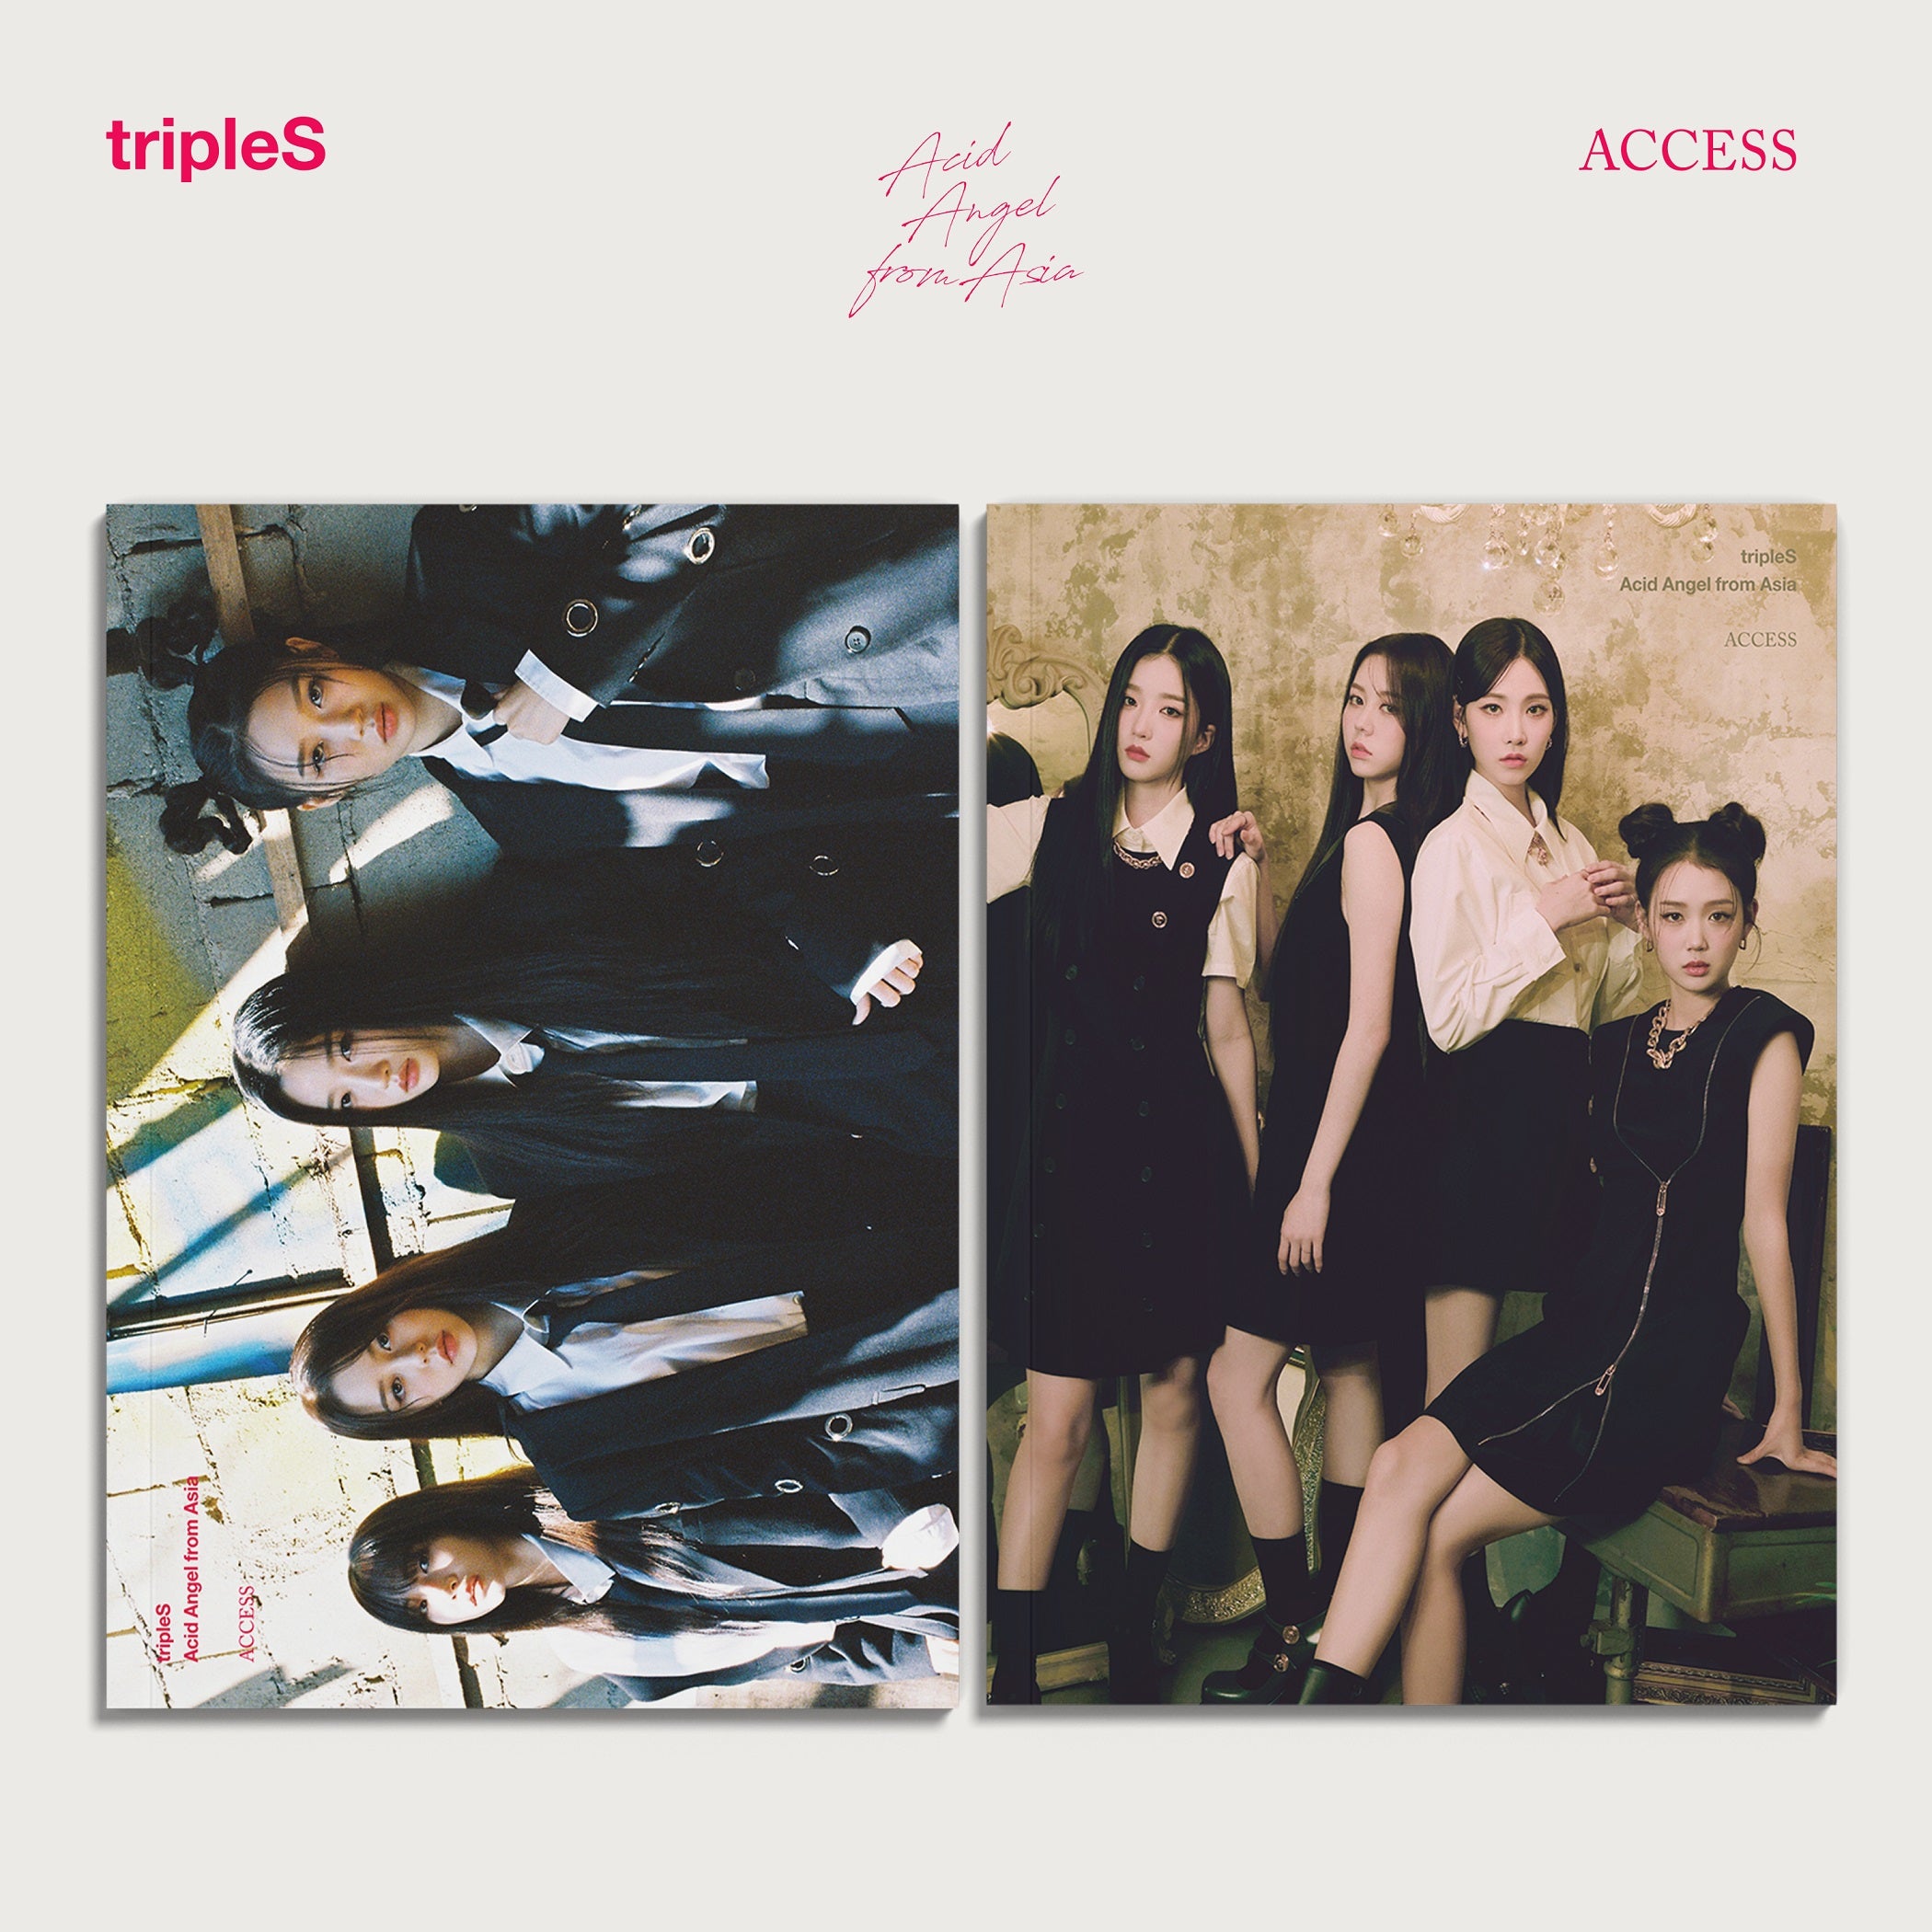 tripleS - Acid Angel from Asia 'ACCESS' (Random Ver.)